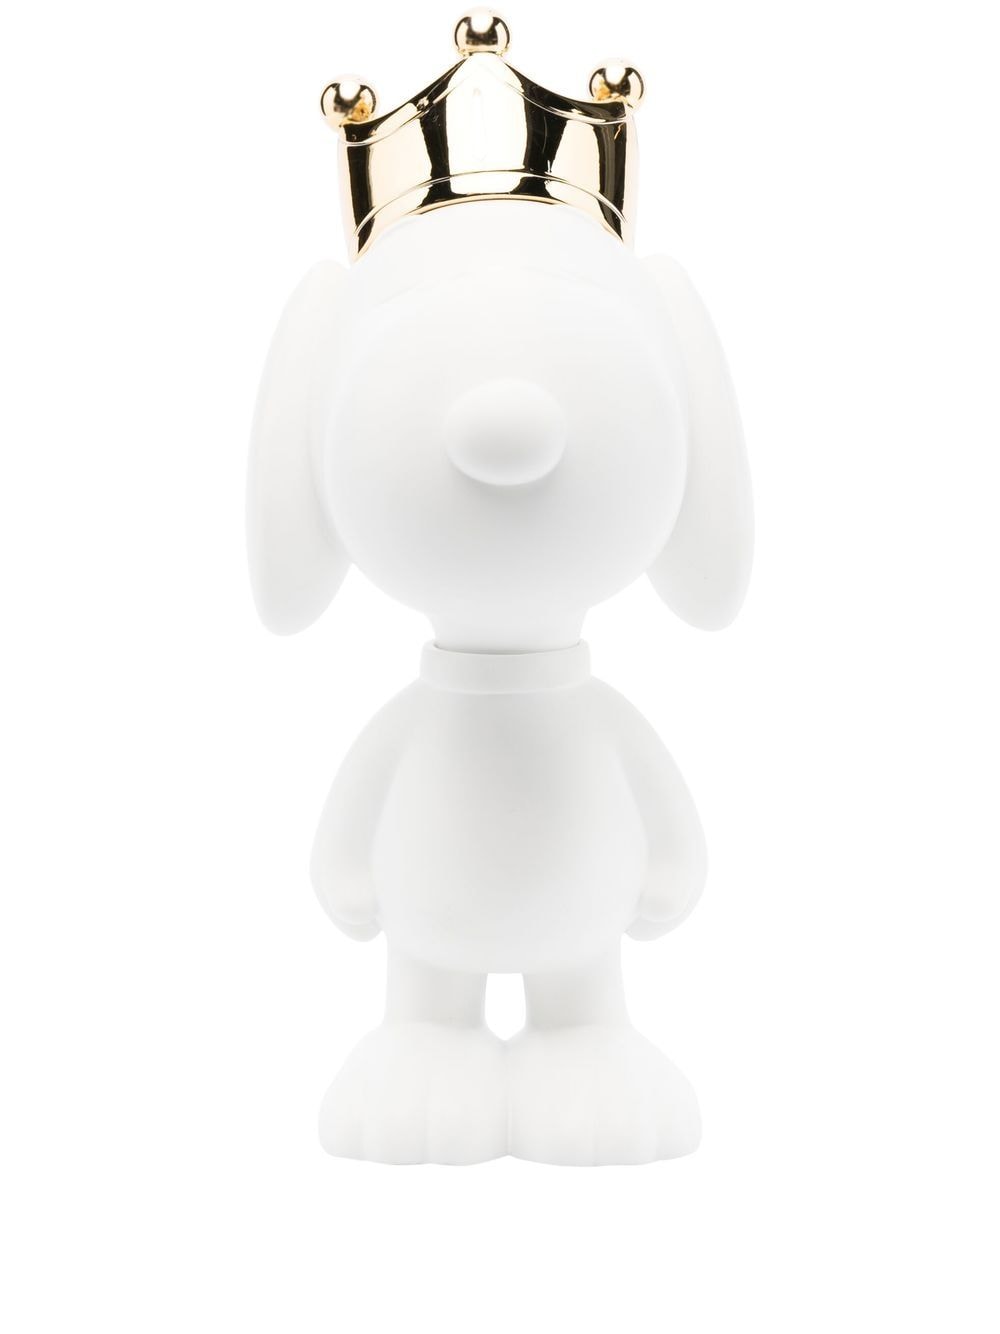 LEBLON DELIENNE Snoopy Crown figurine (31cm) - White